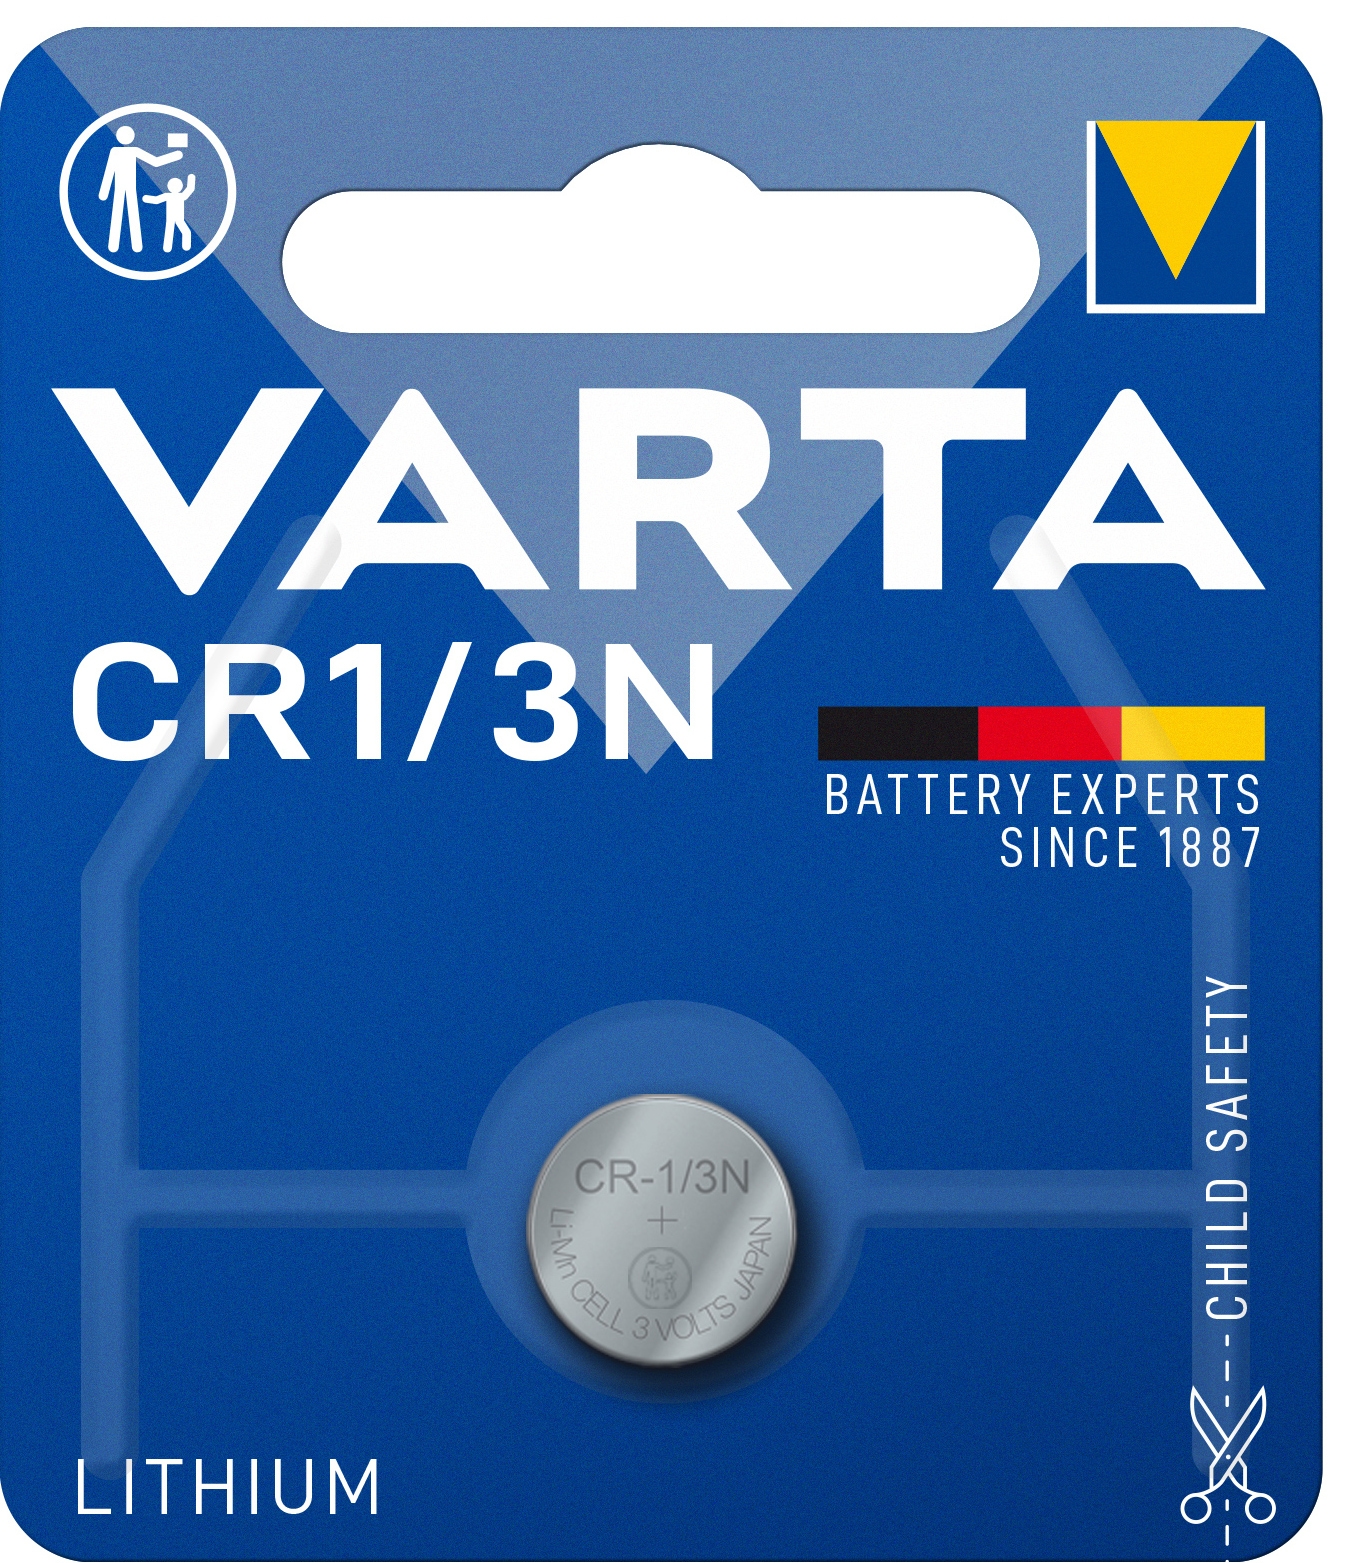 Varta CR 1/3 N-batteri (pakke med 1) thumbnail